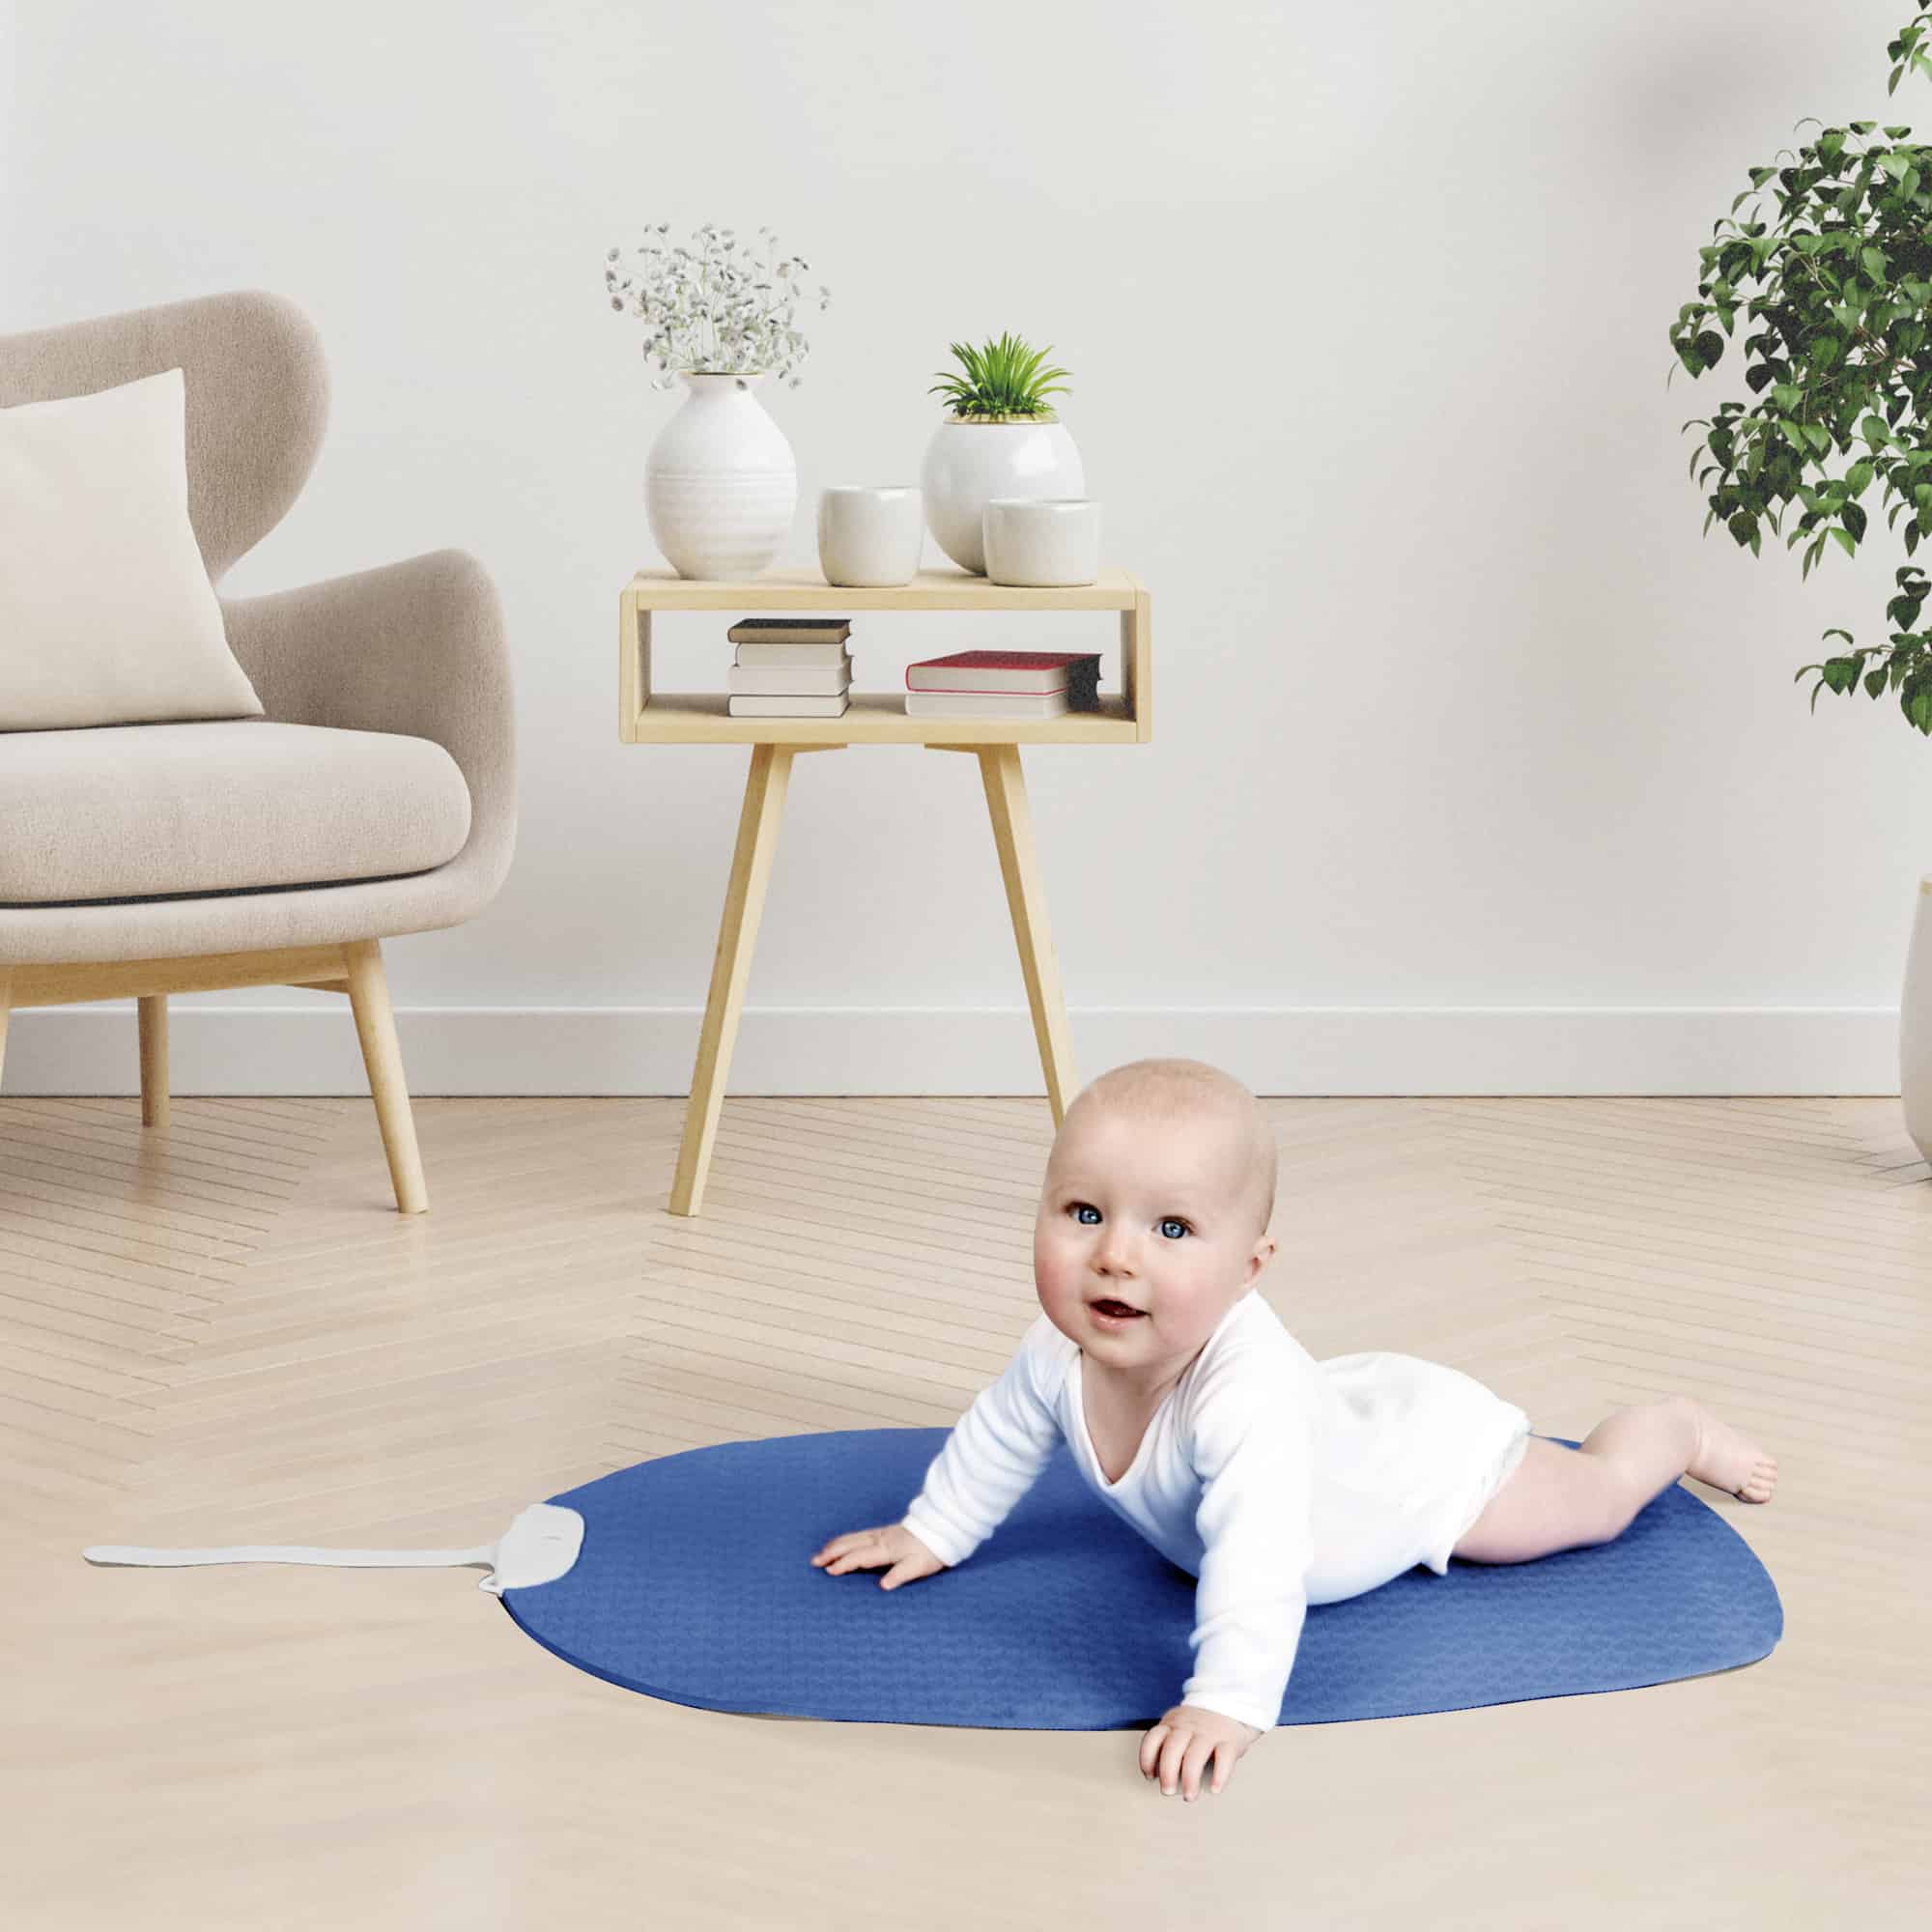 Baby on yoga play mat